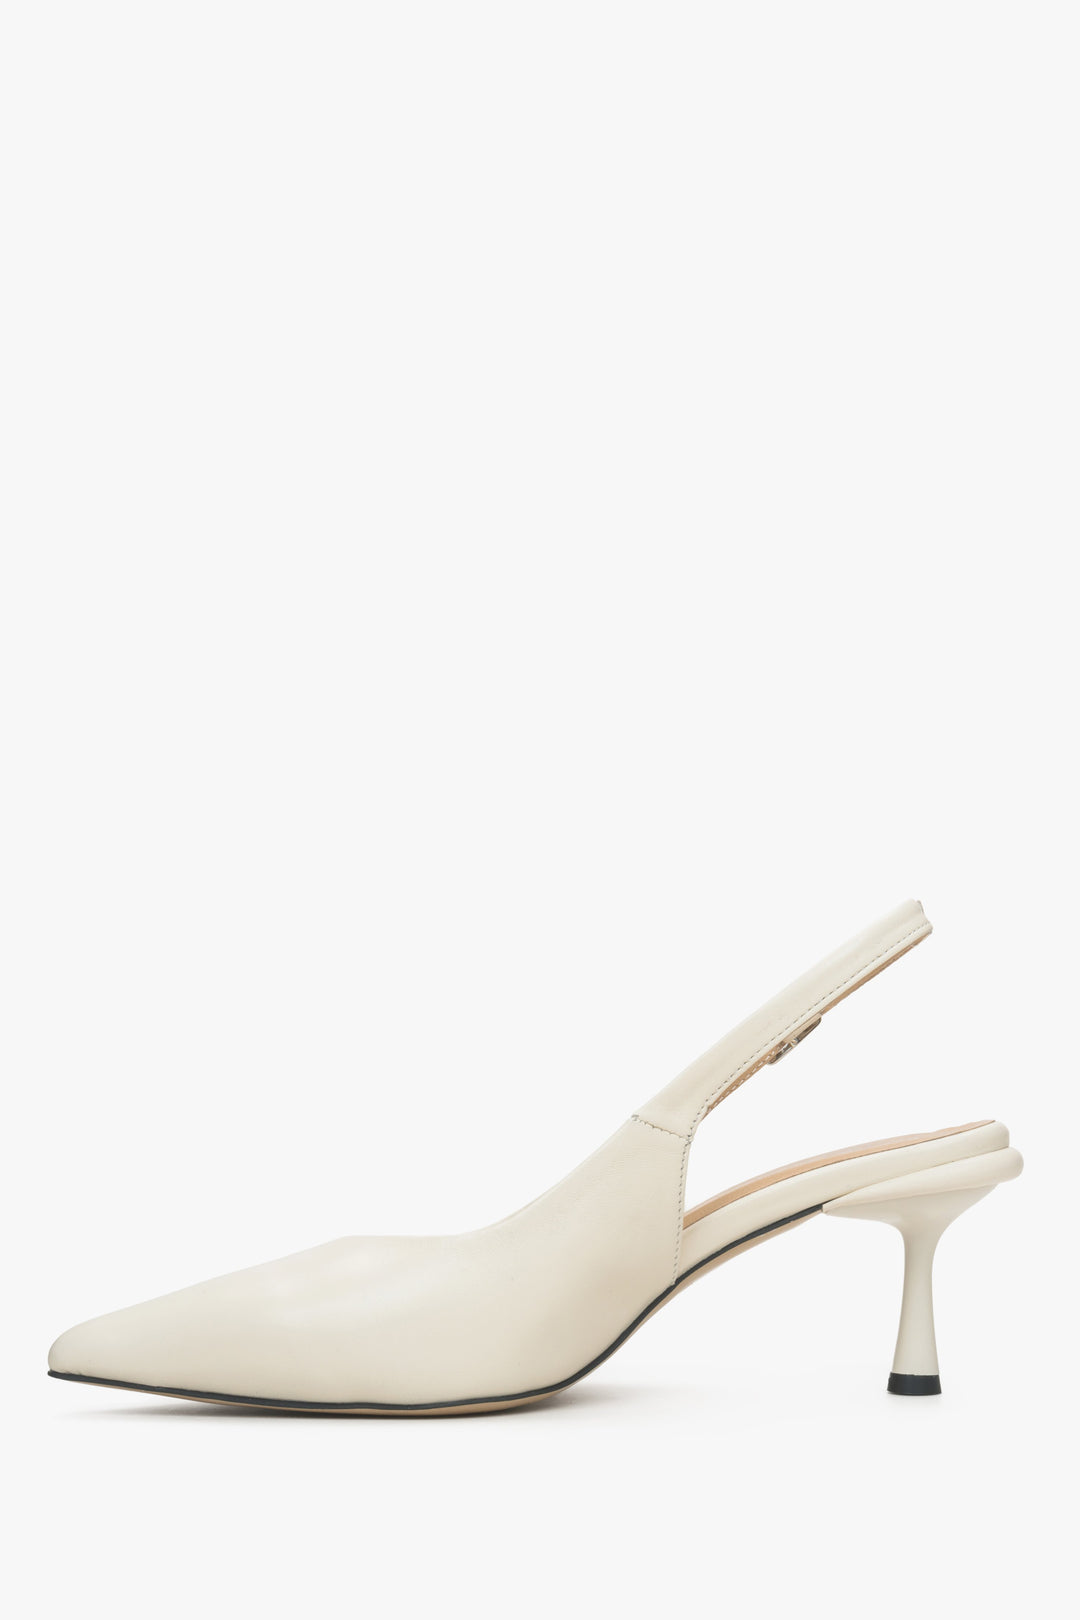 Women's white leather  slingback shoes by Estro - shoe profile.